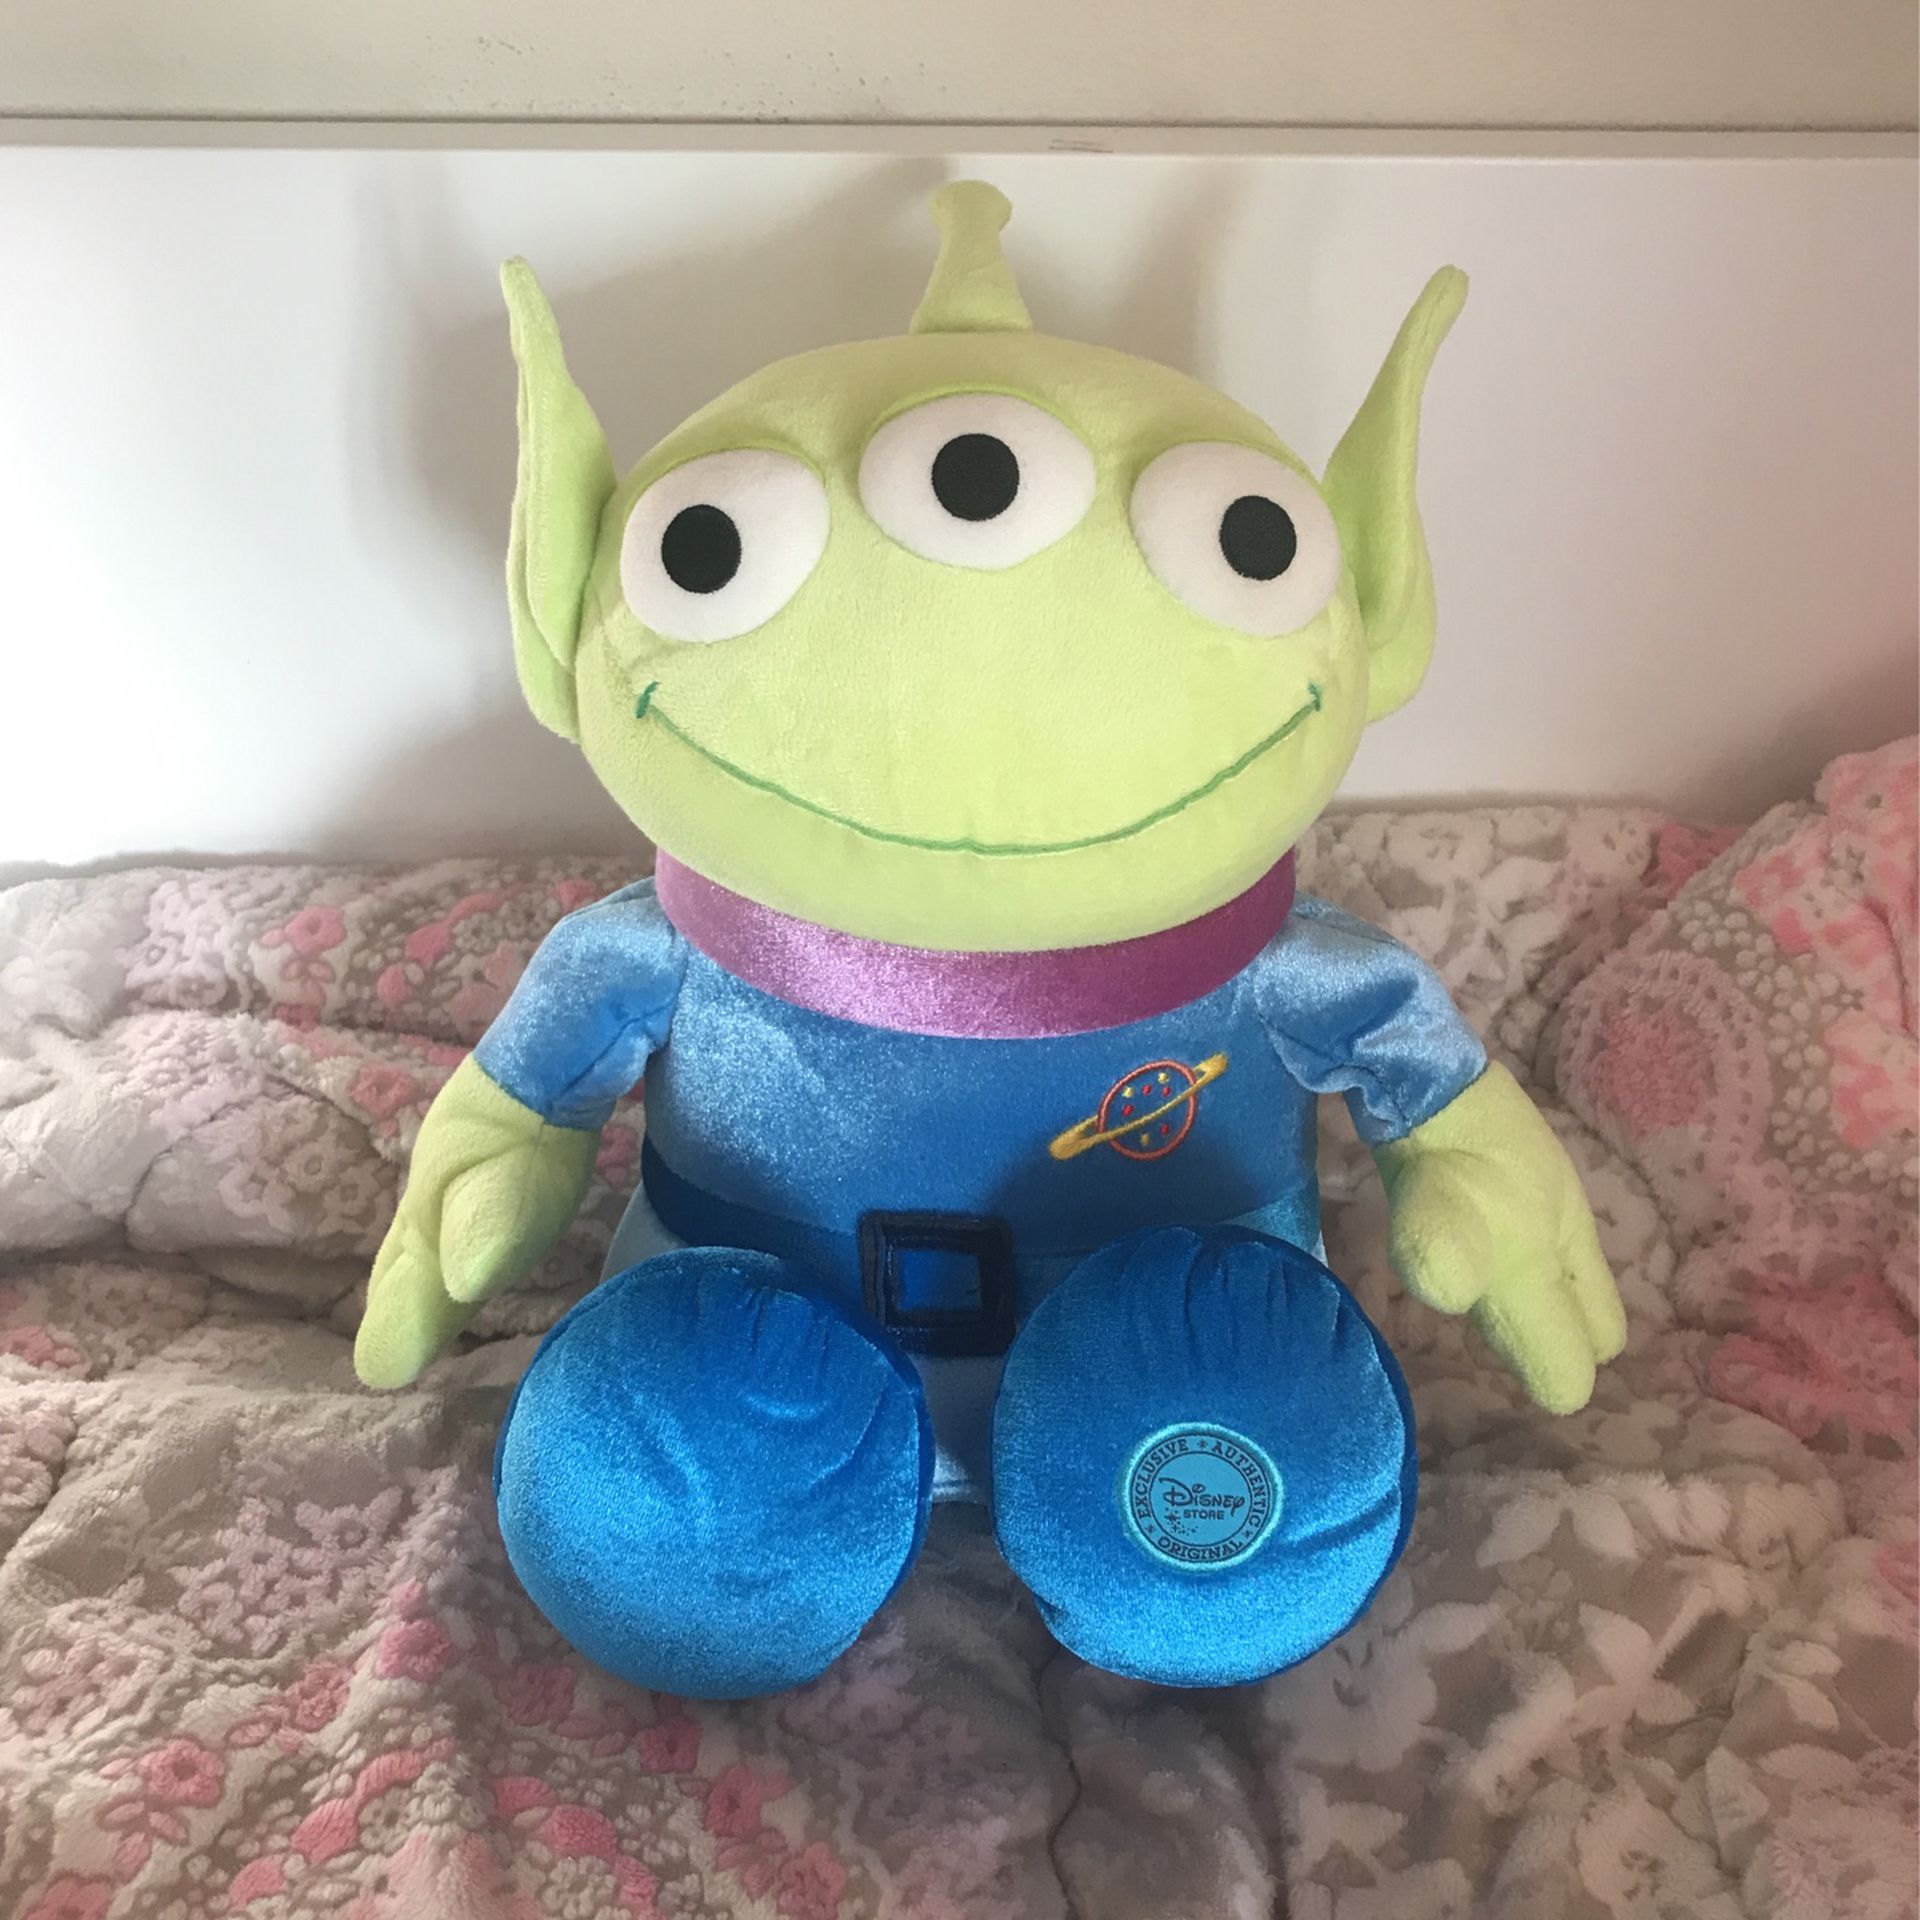 Toy Story Alien Plushie Stuffed Animal